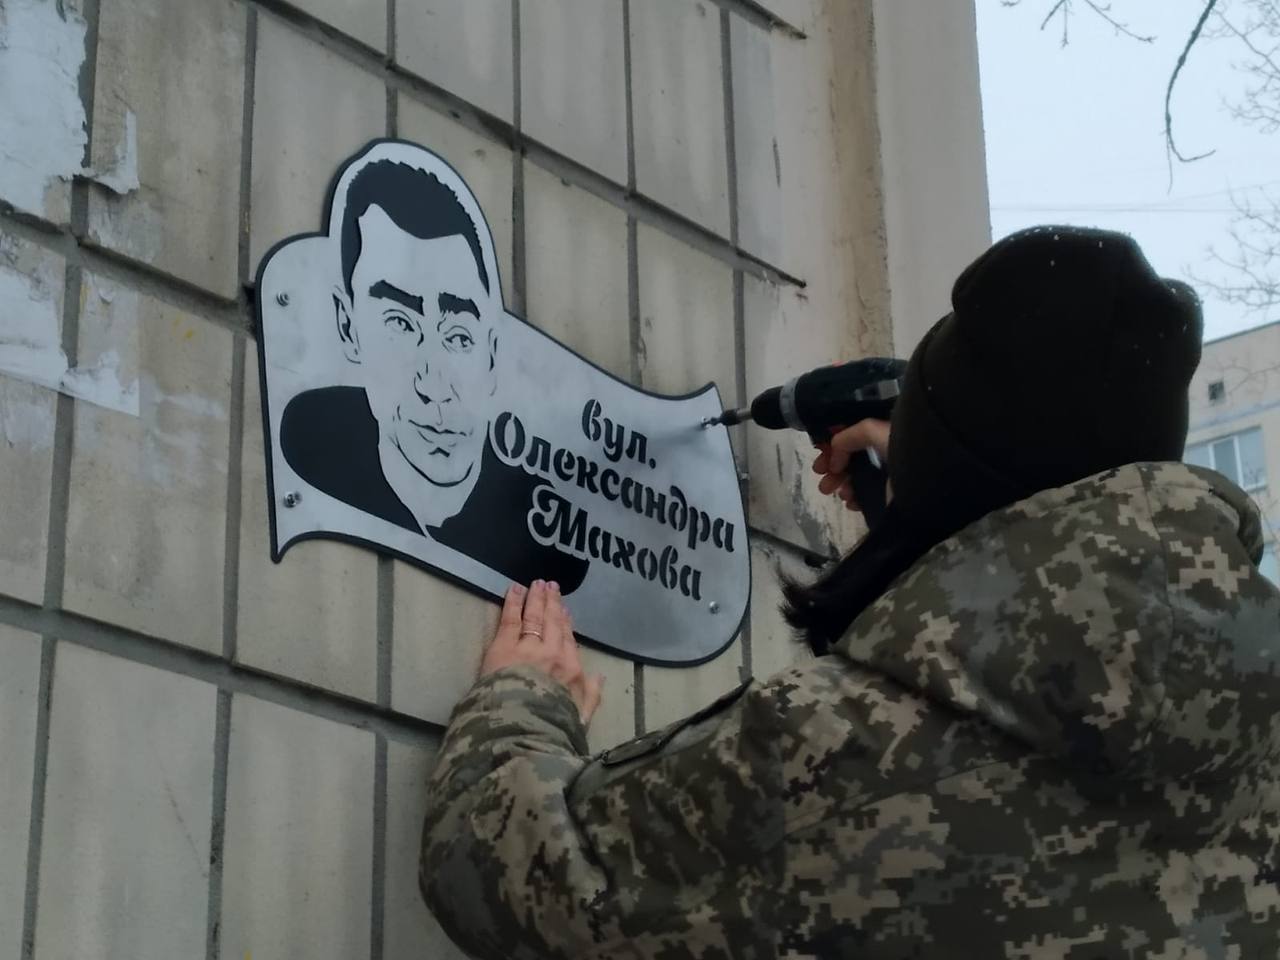 Kyiv, Oleksandr Makhov street, nov 22, Anastasiya is installing a sign in honor of the street name